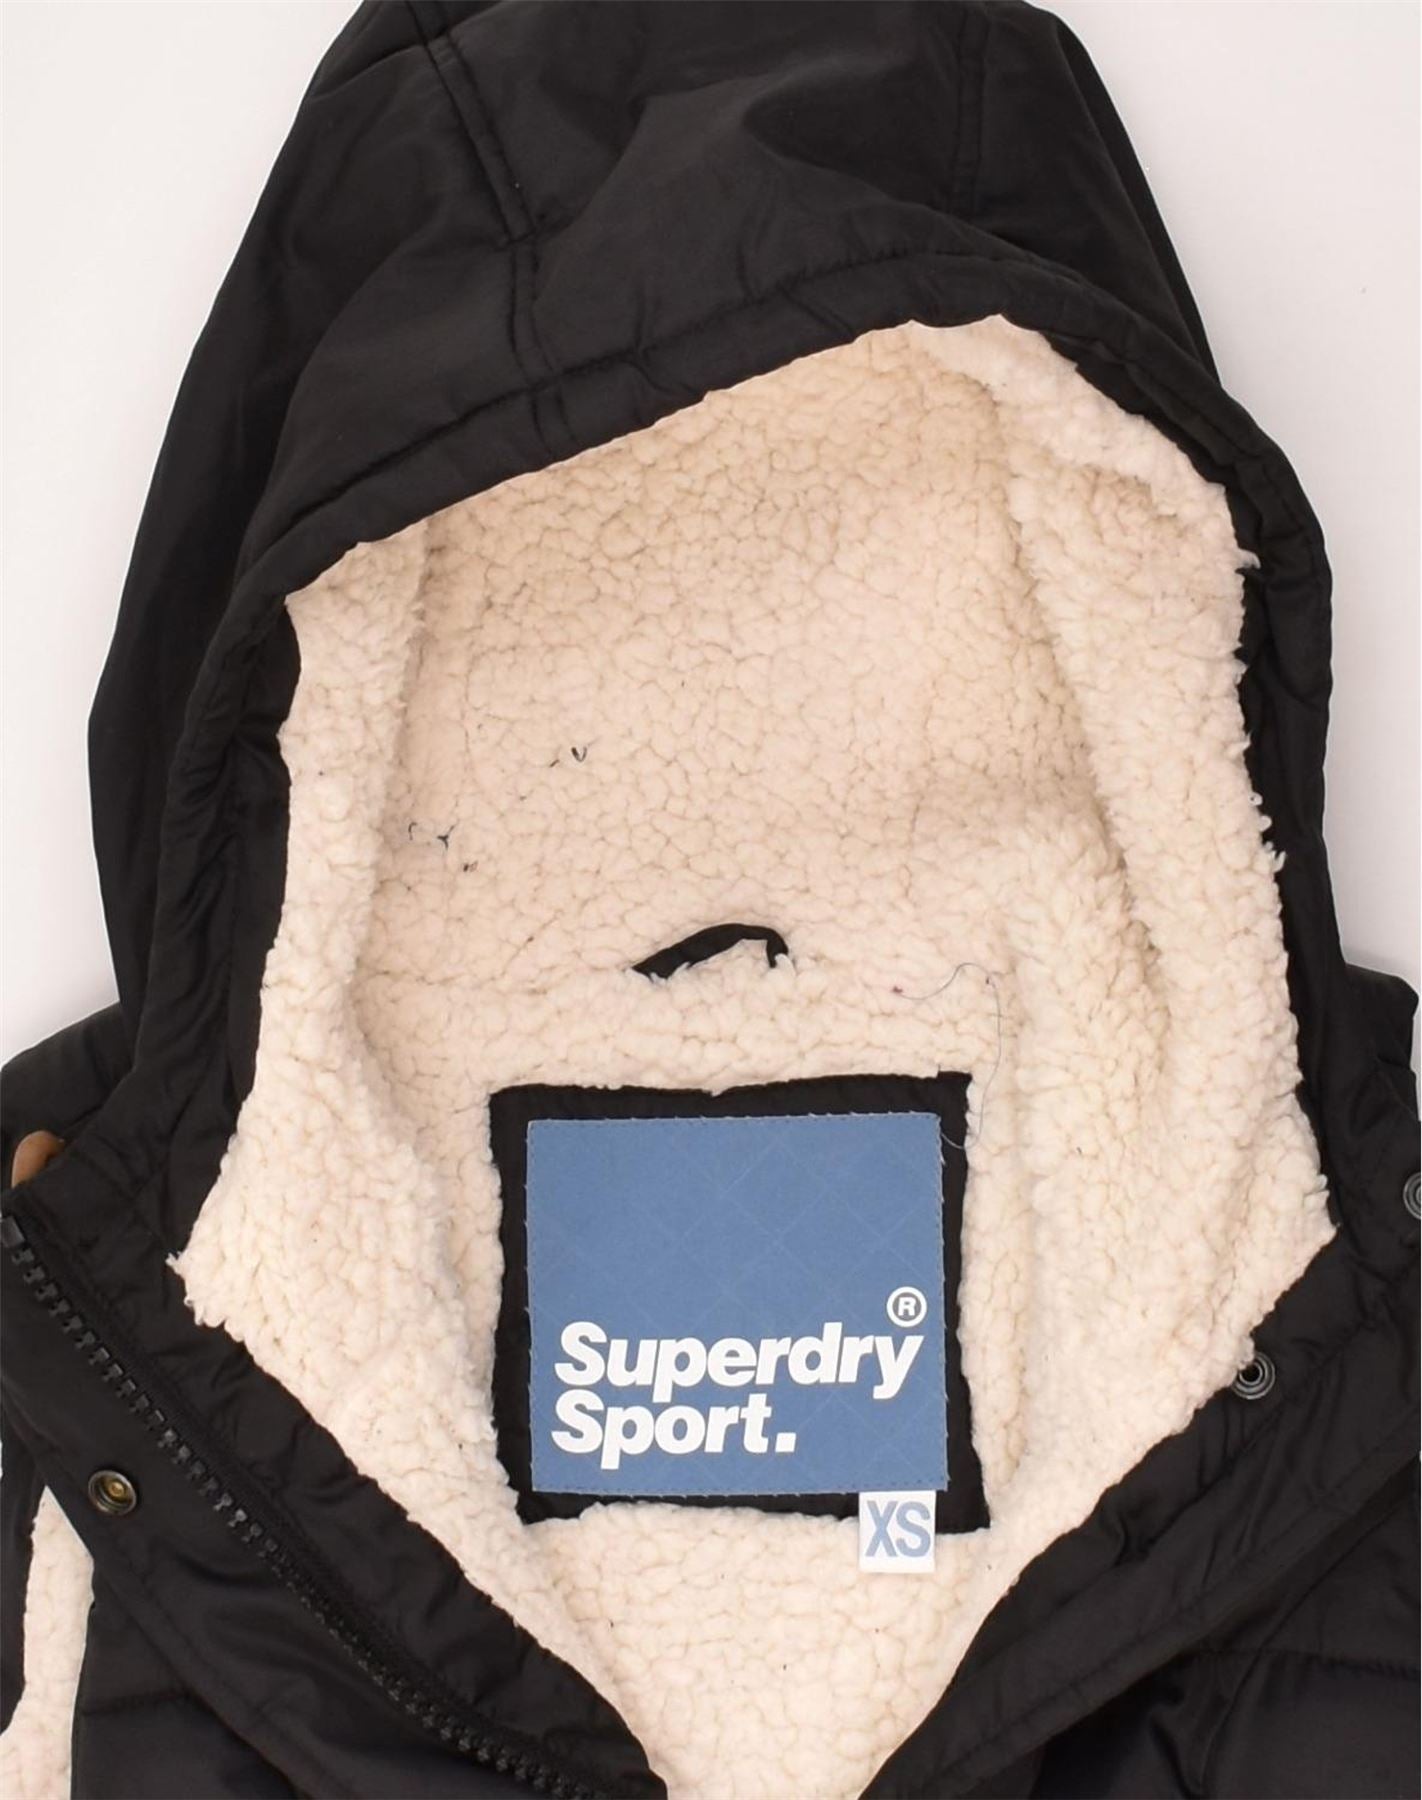 Superdry Womens Superdry Sport Quilted Gilet (Black Superdry Sport)